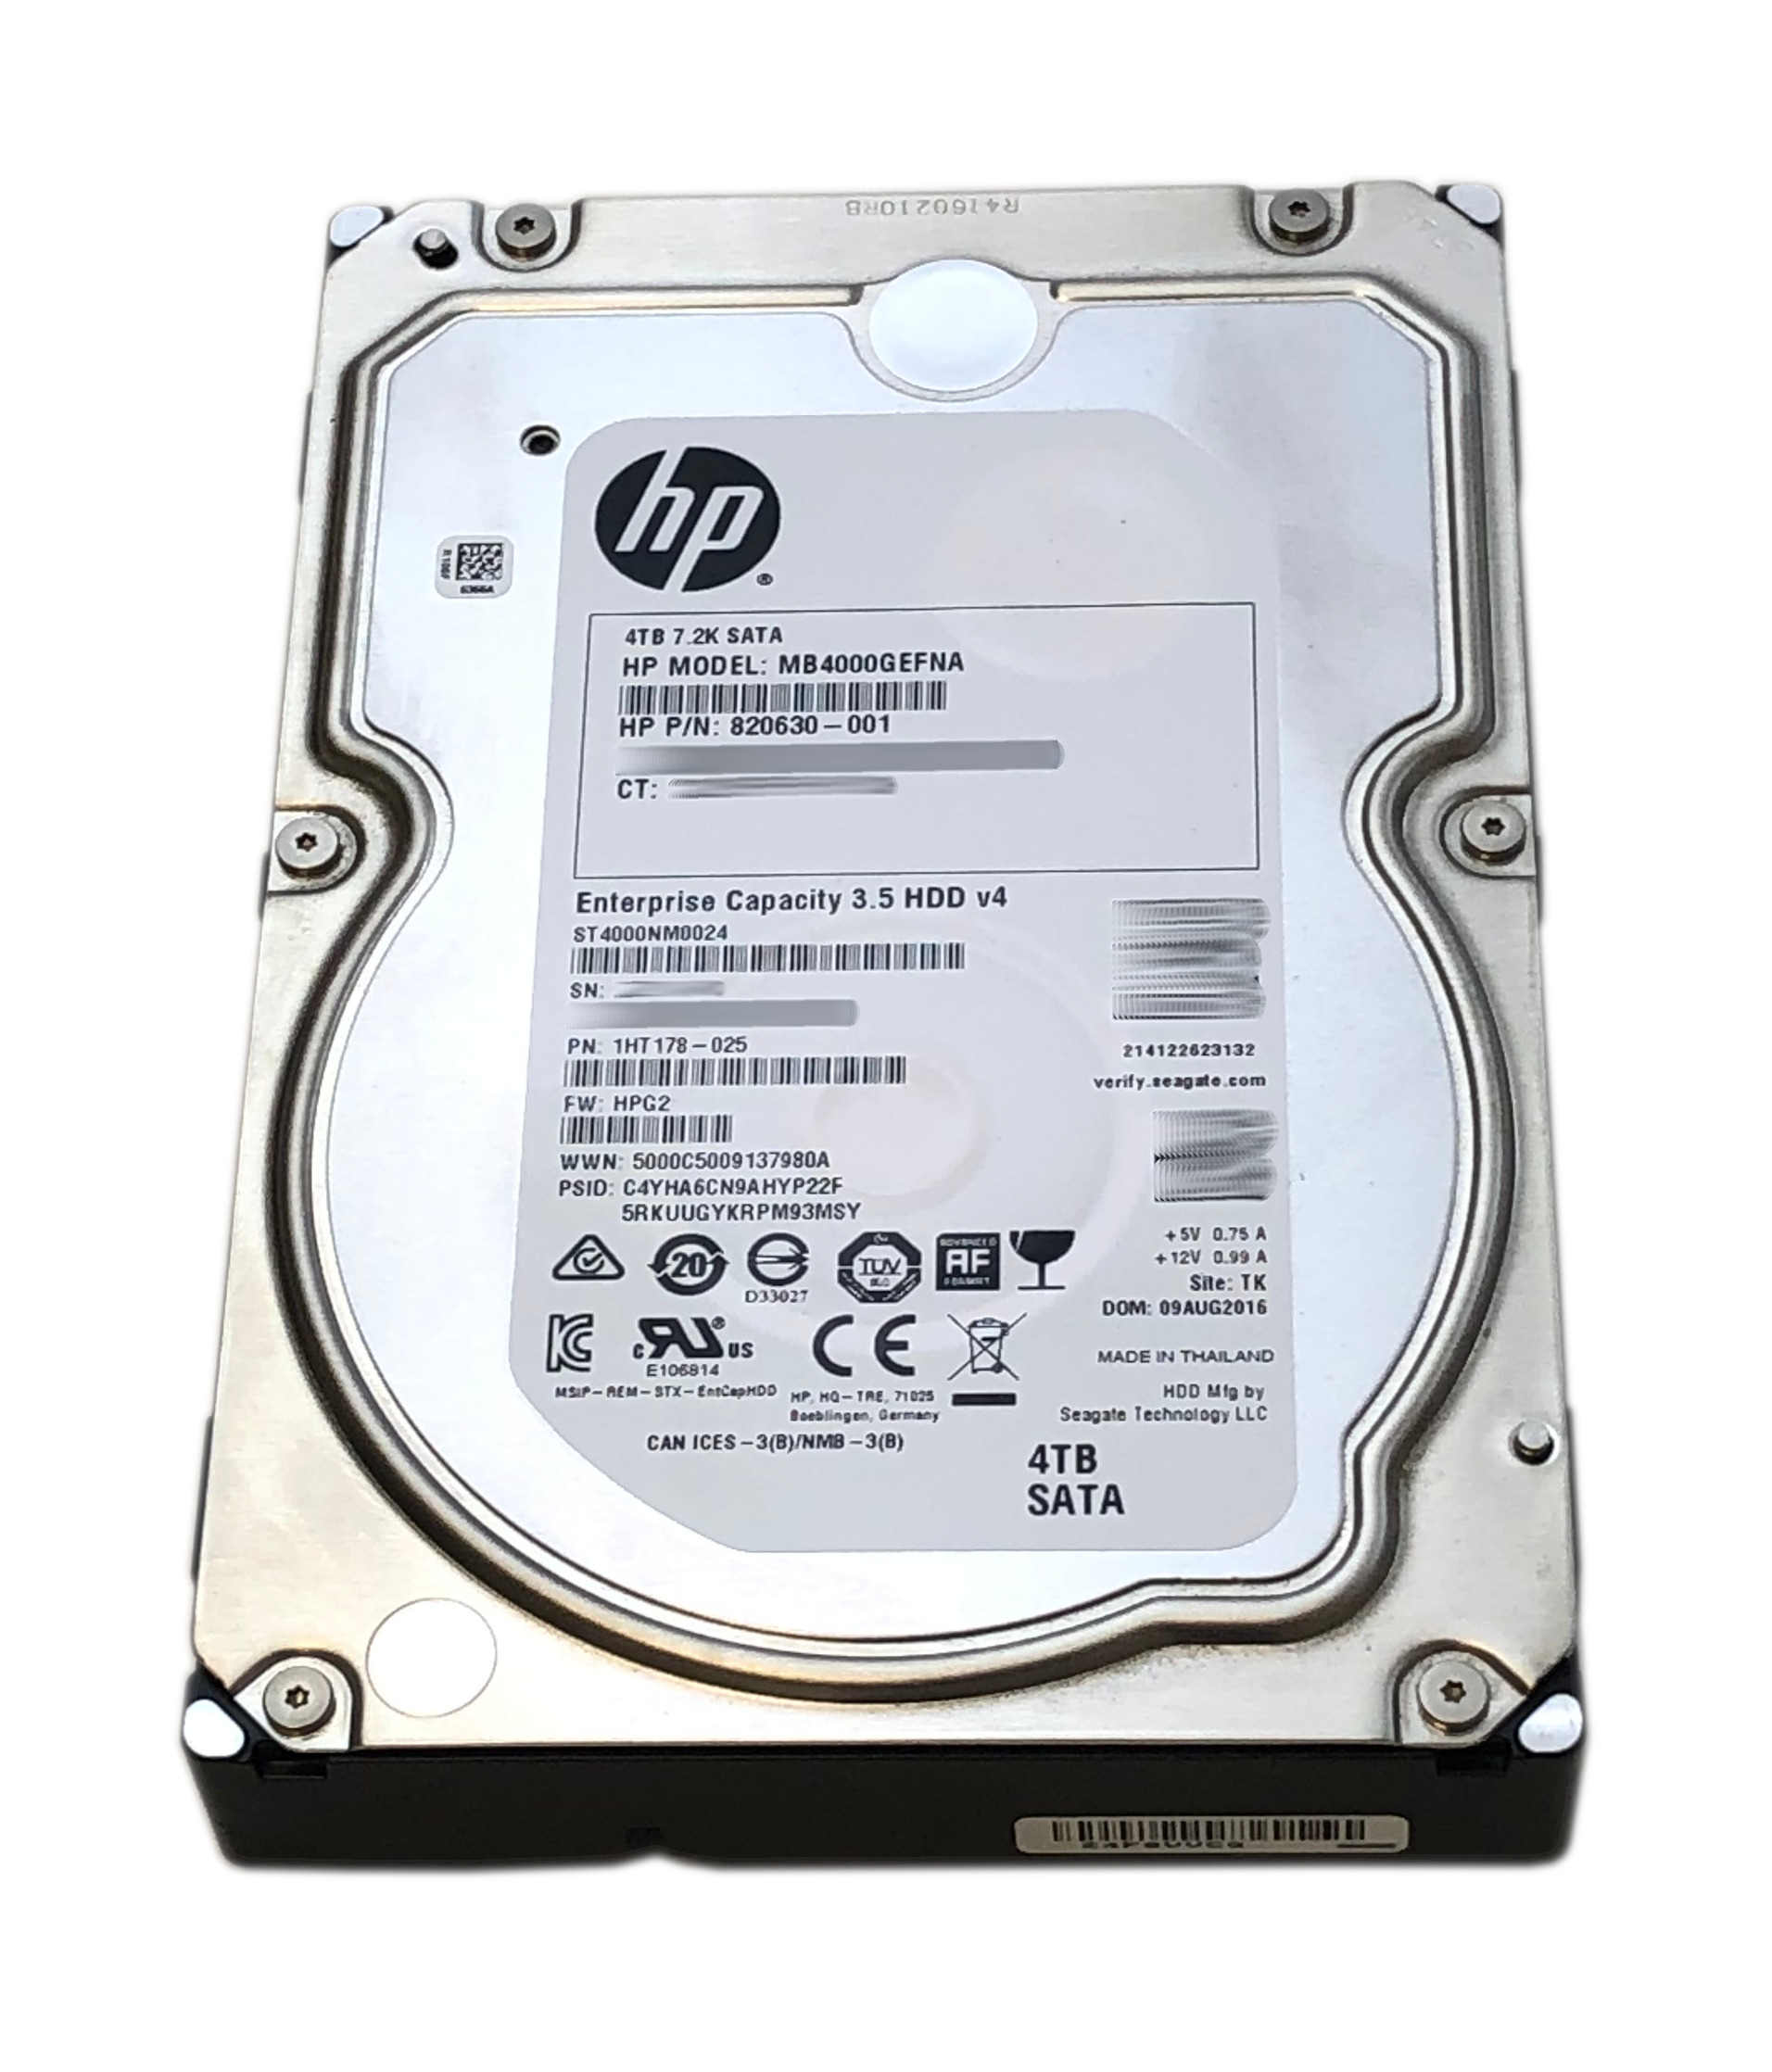 HP Seagate 4TB MB4000GEFNA ST4000NM0024 7.2K SATA 6Gbps 128M Cache 820630-001 793511-001